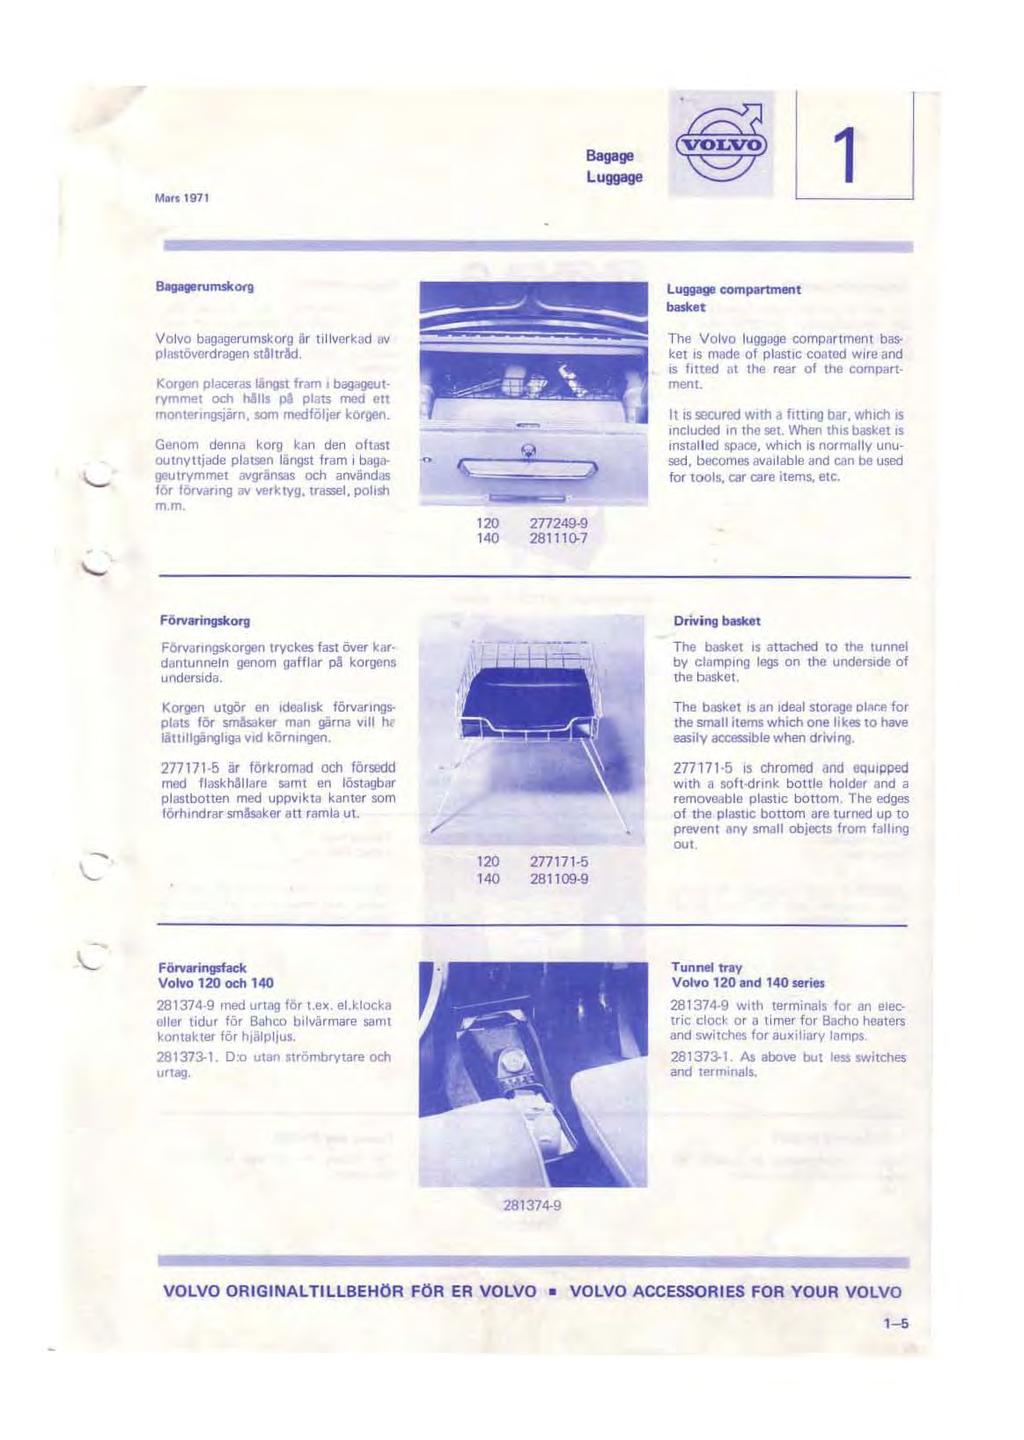 Volvo Original Tillbehör. Genuine Volvo Accessories. Diverse utrustning  Miscellaneous equipment. Lighting. Vehicle maintenance. - PDF Gratis  nedladdning